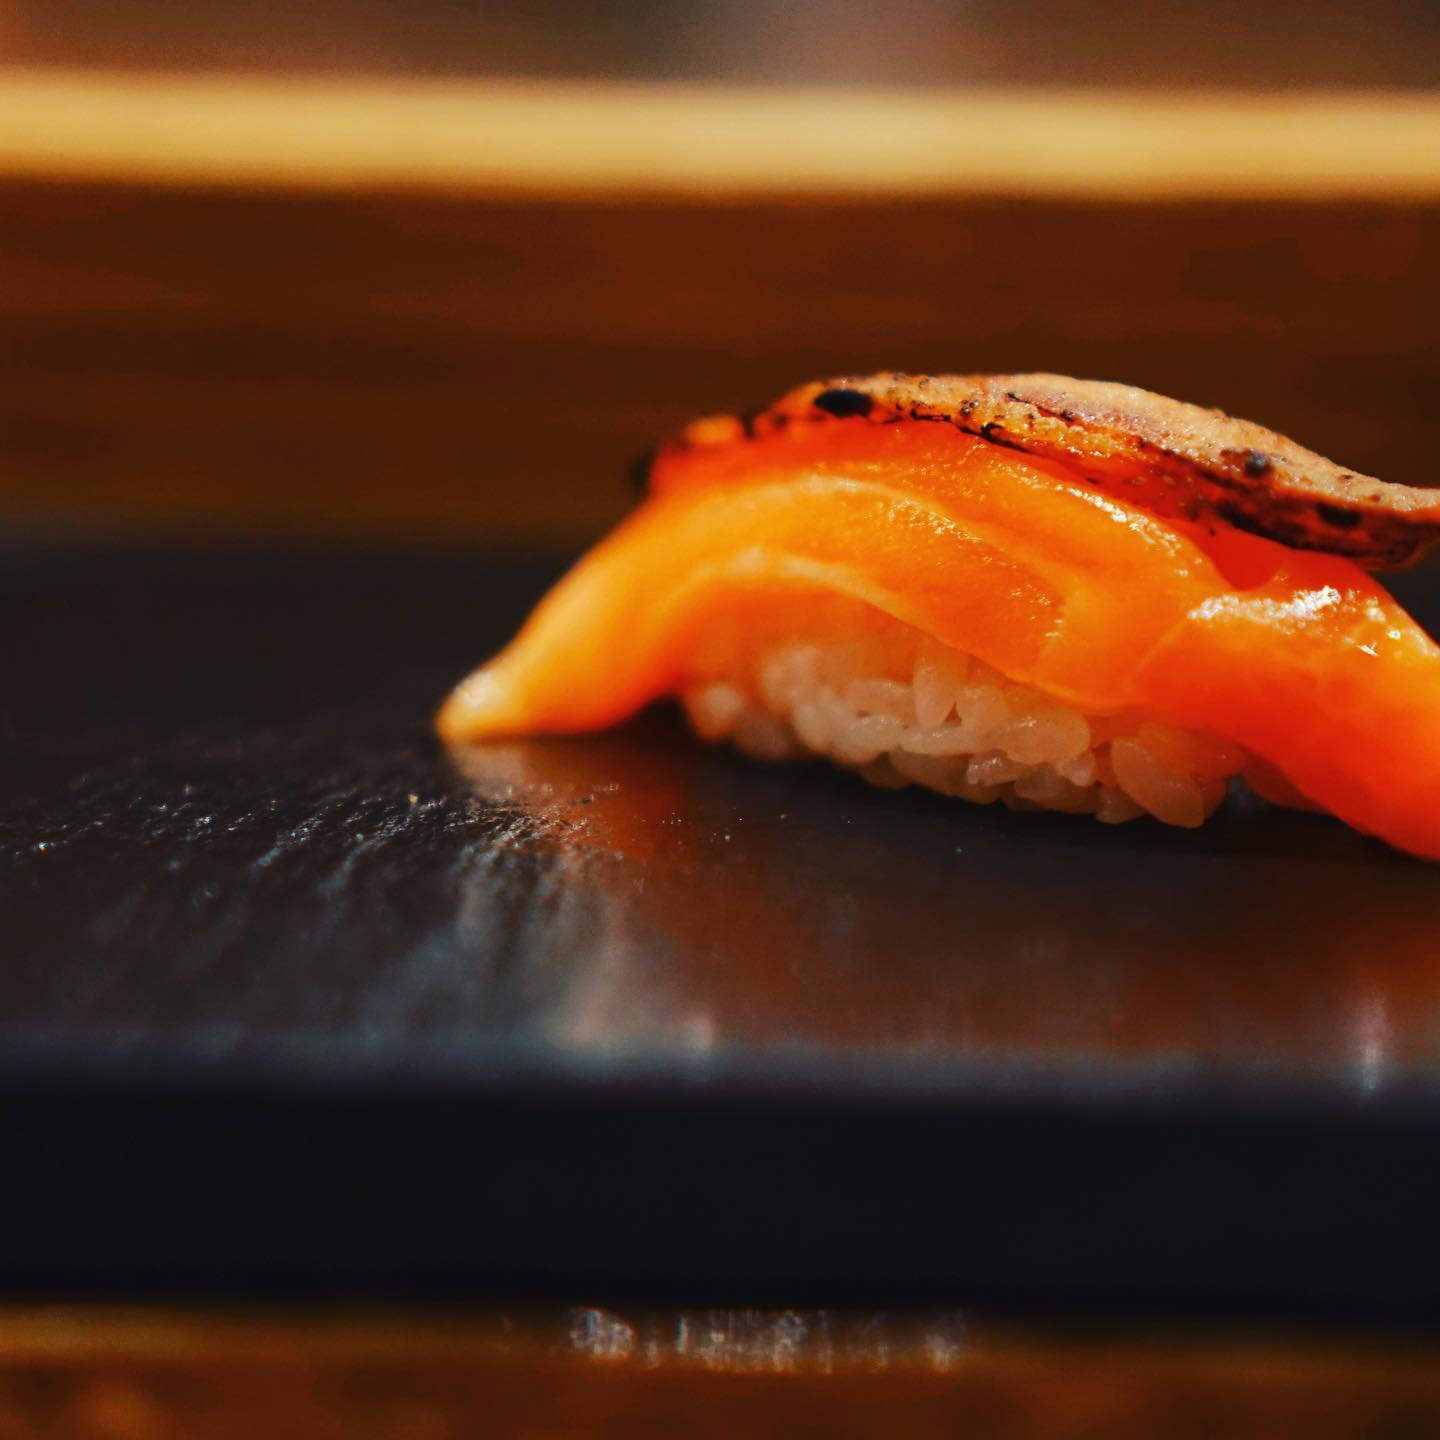 #sushilin #sushi #brooklyn #flatbush #tomato #salmon